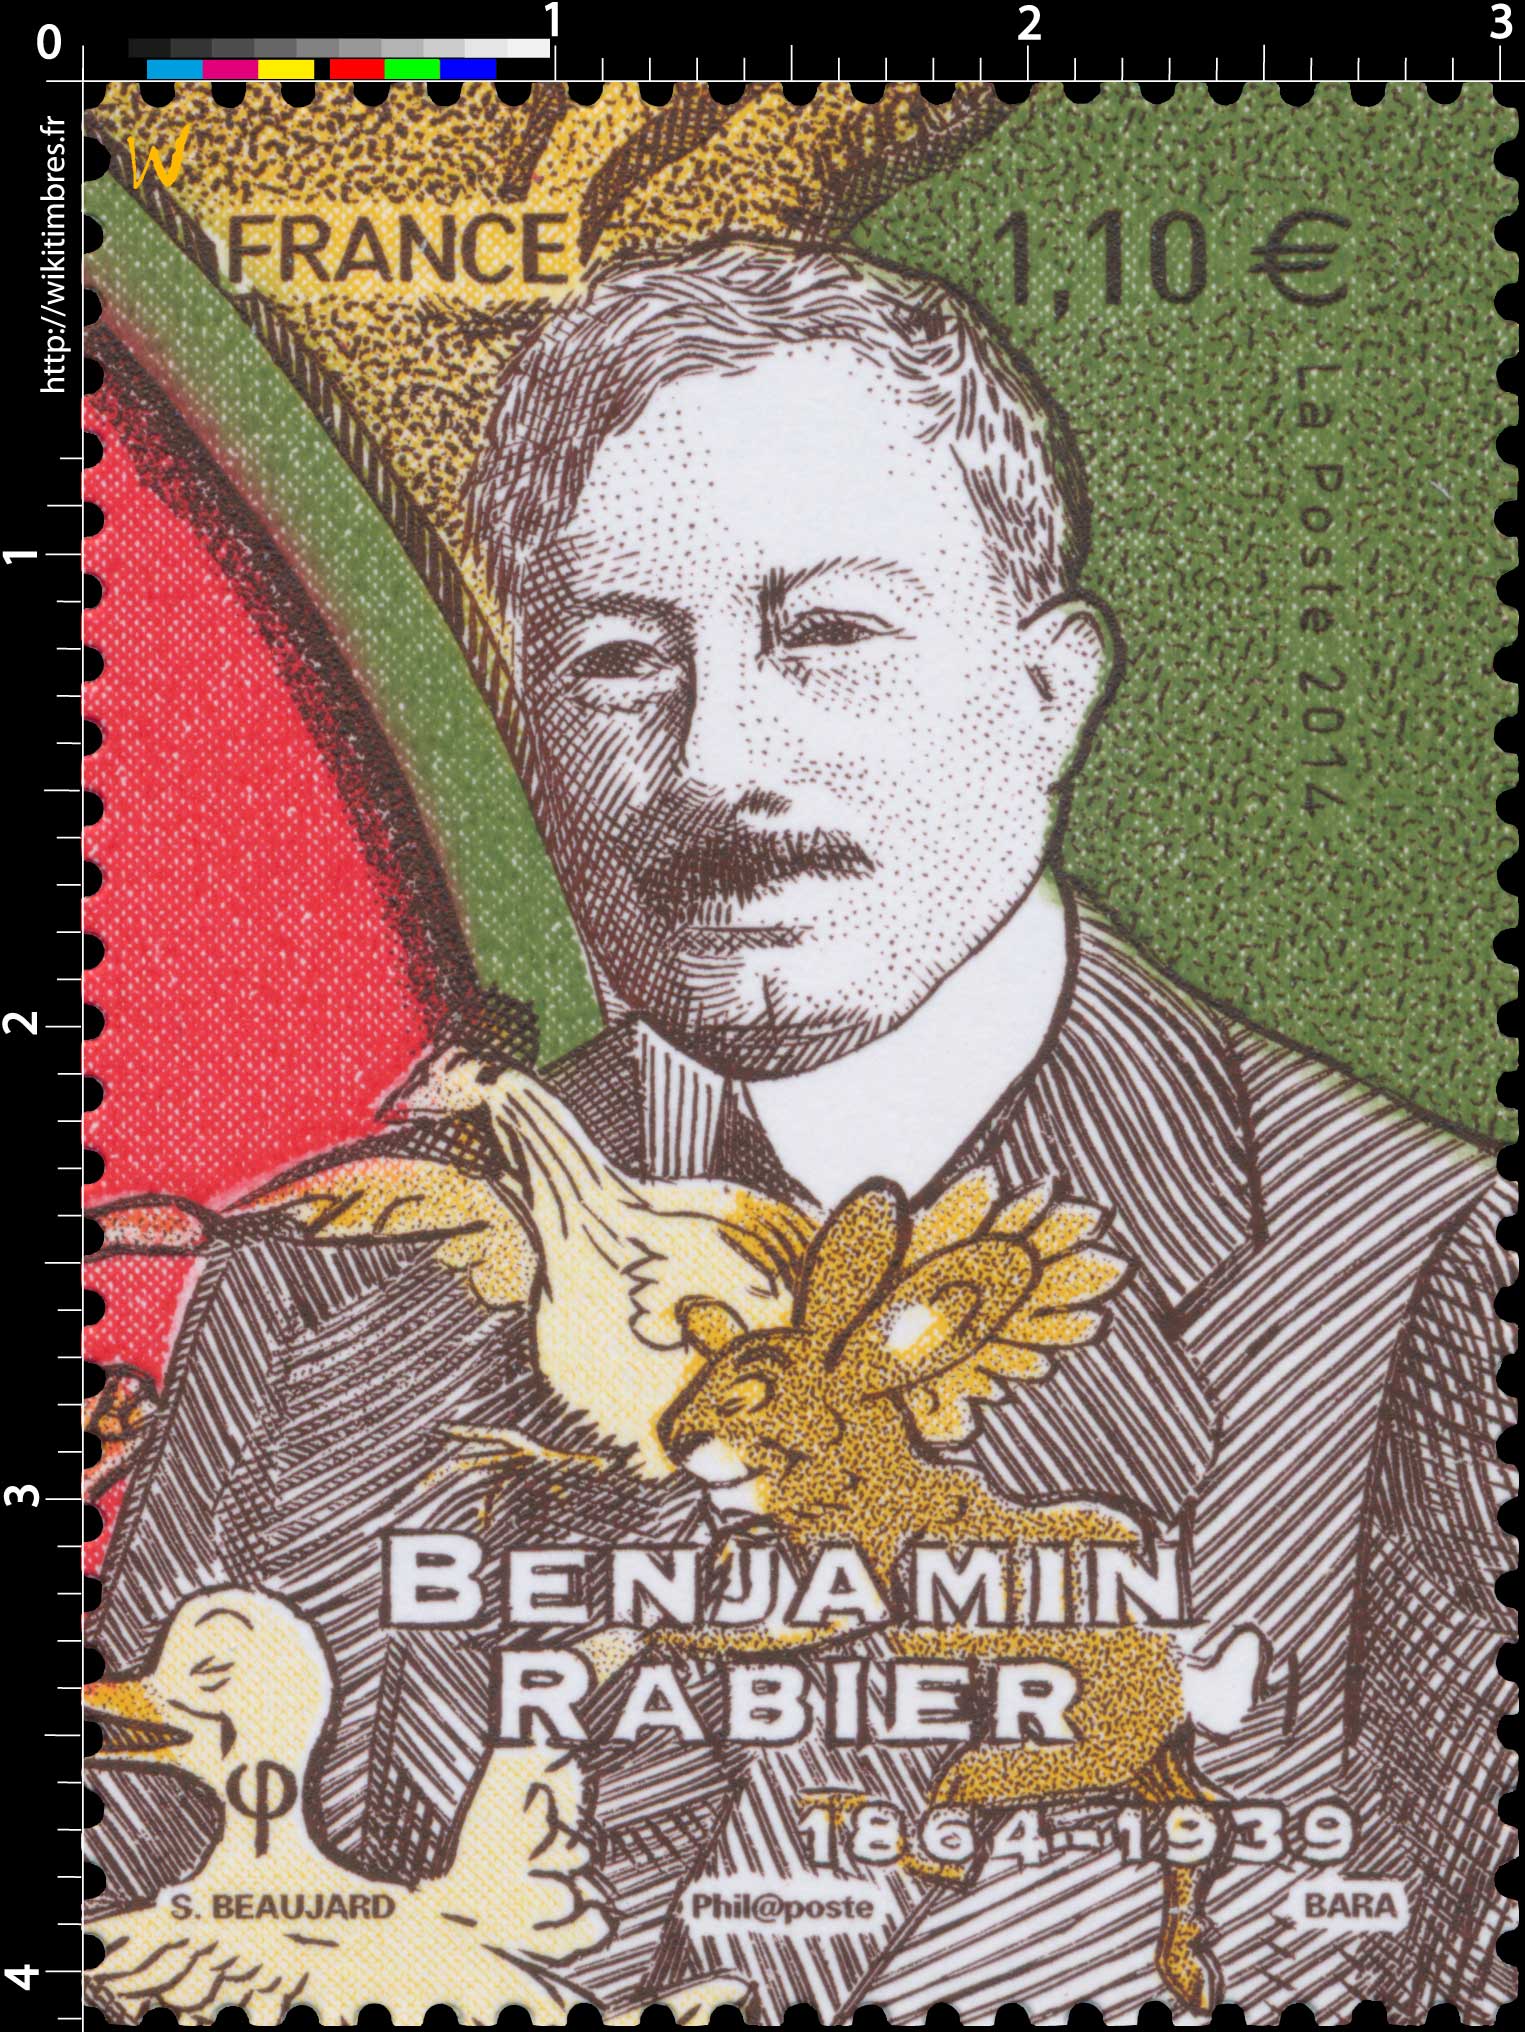 2014 Benjamin Rabier (1864-1939)